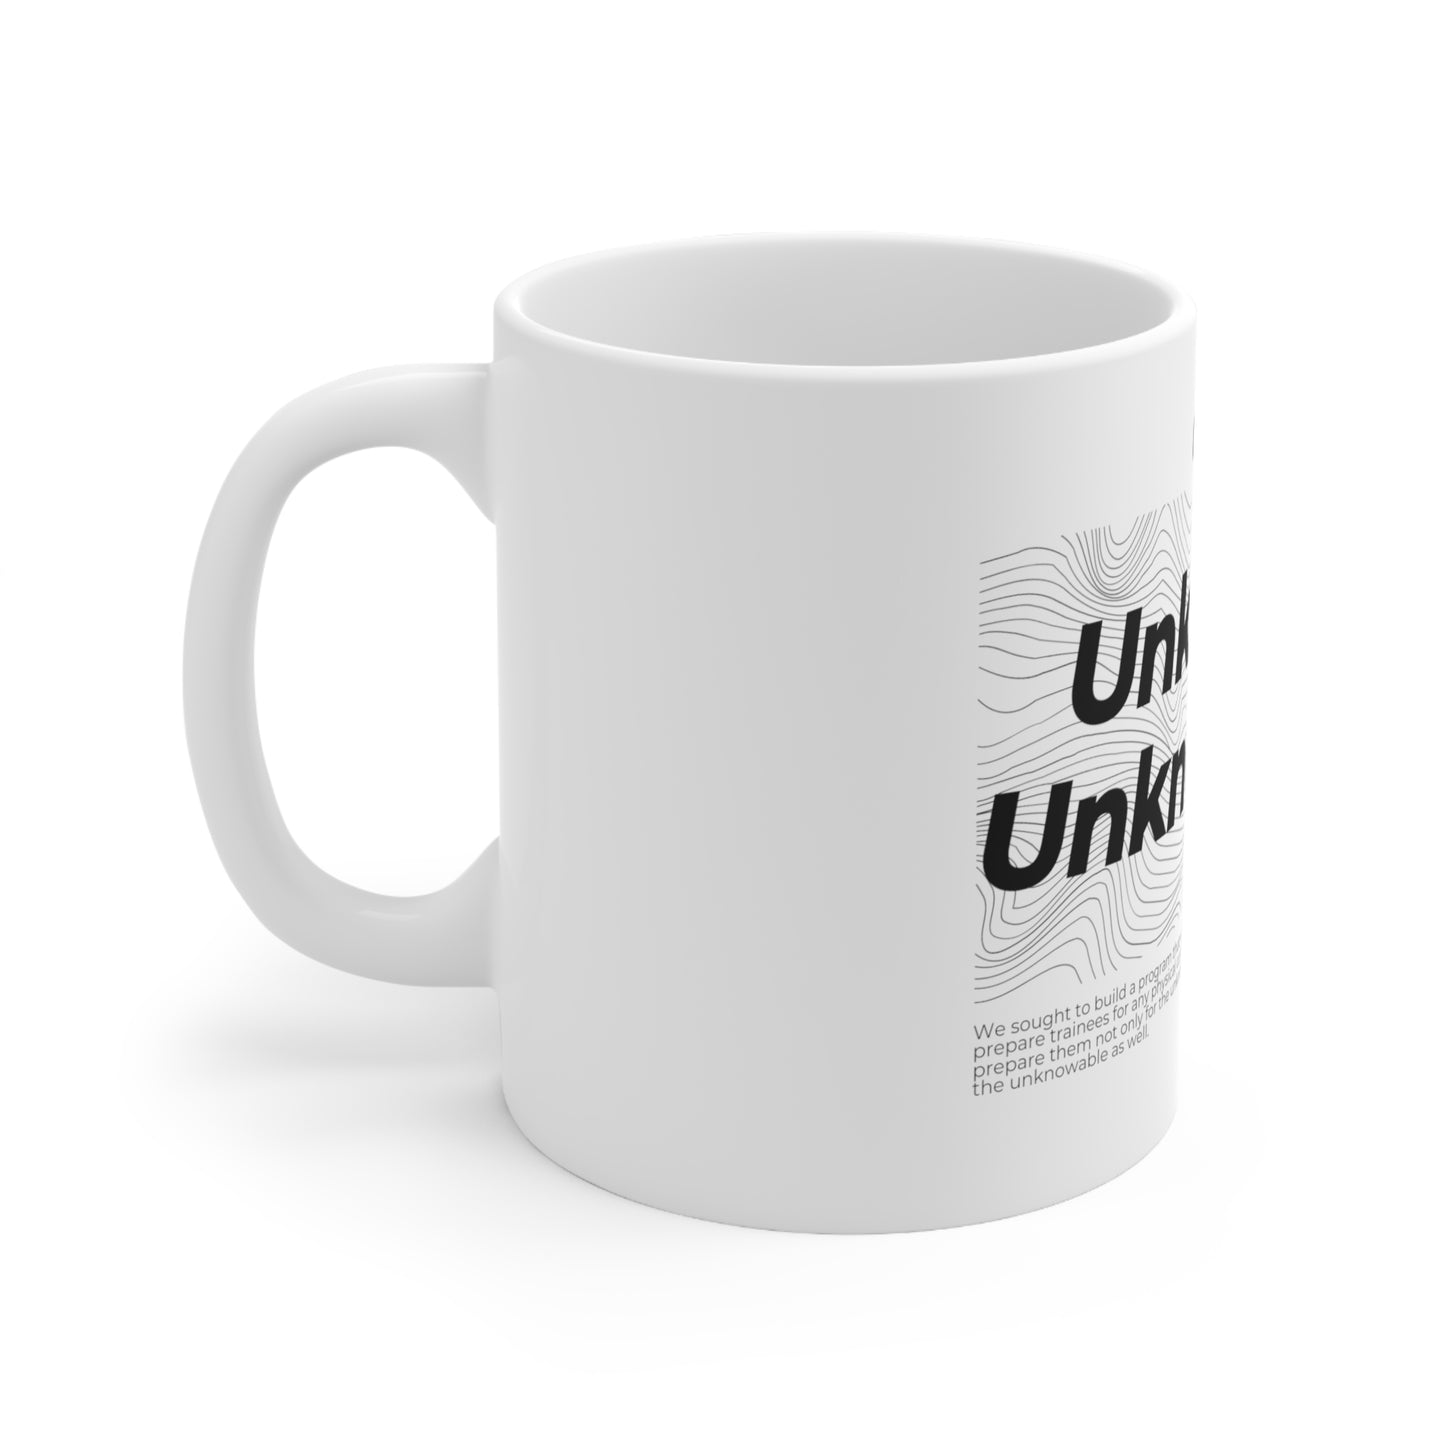 Unknown / Uknowable Coffee Mug